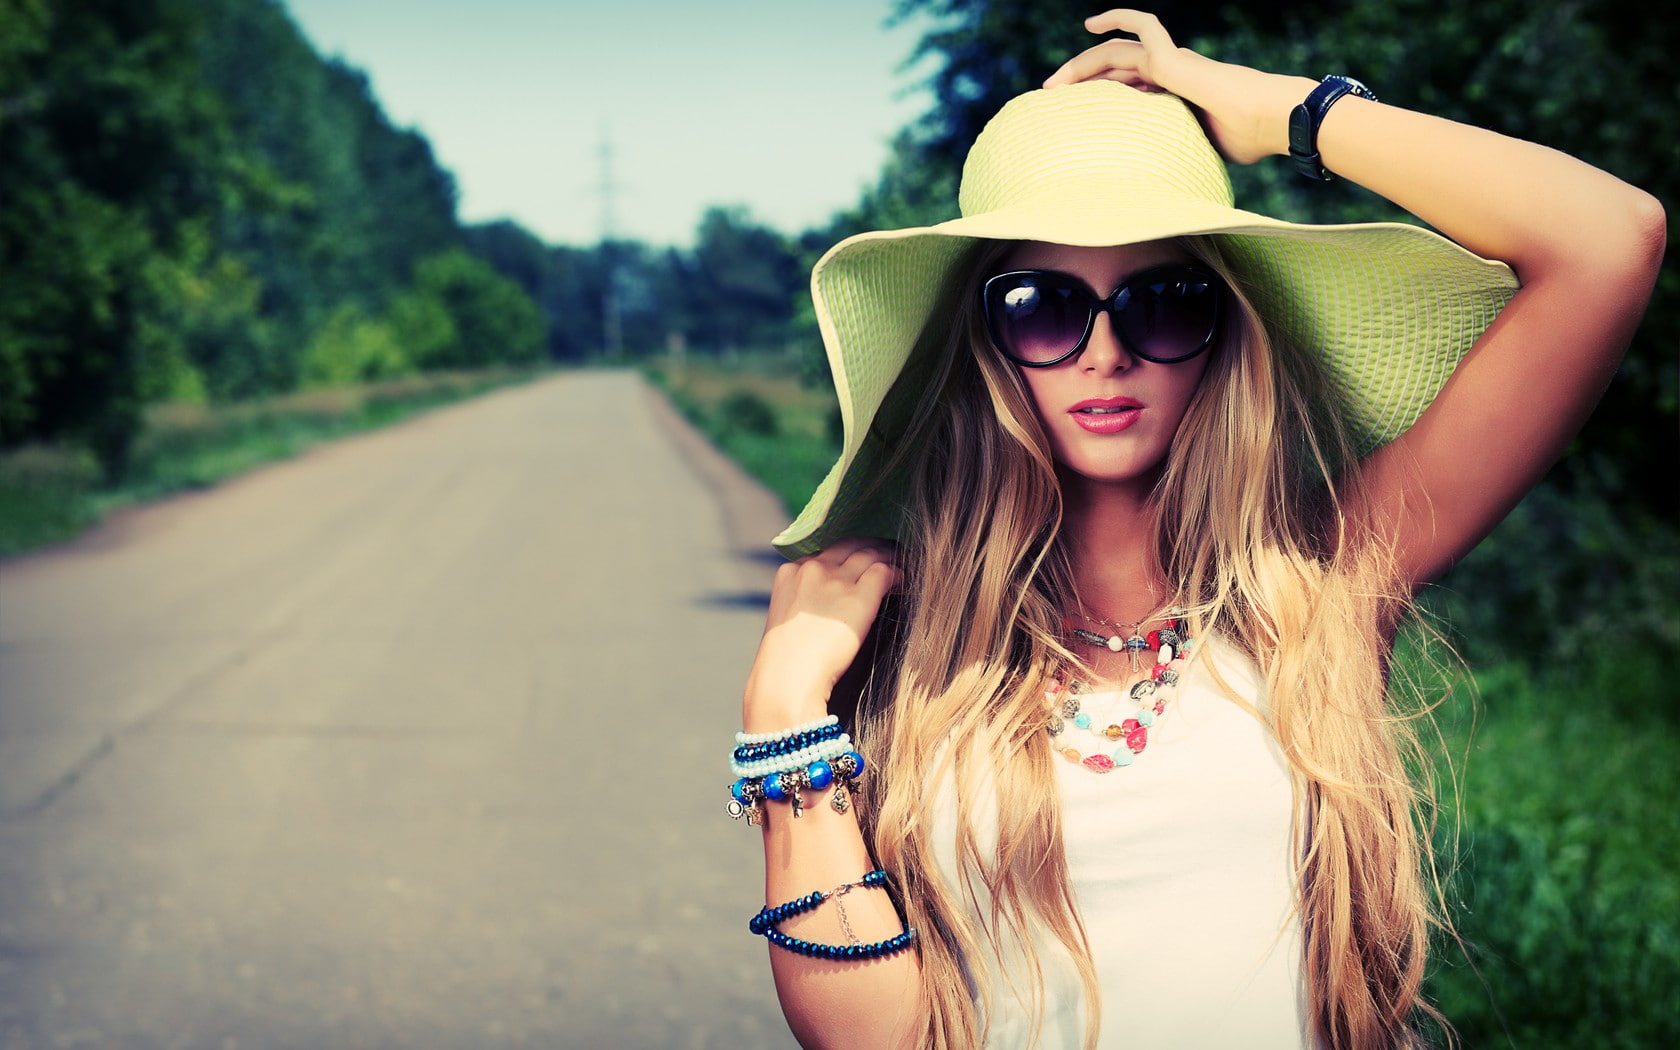 women, hands on head, hat, road, sunglasses, blonde, necklace